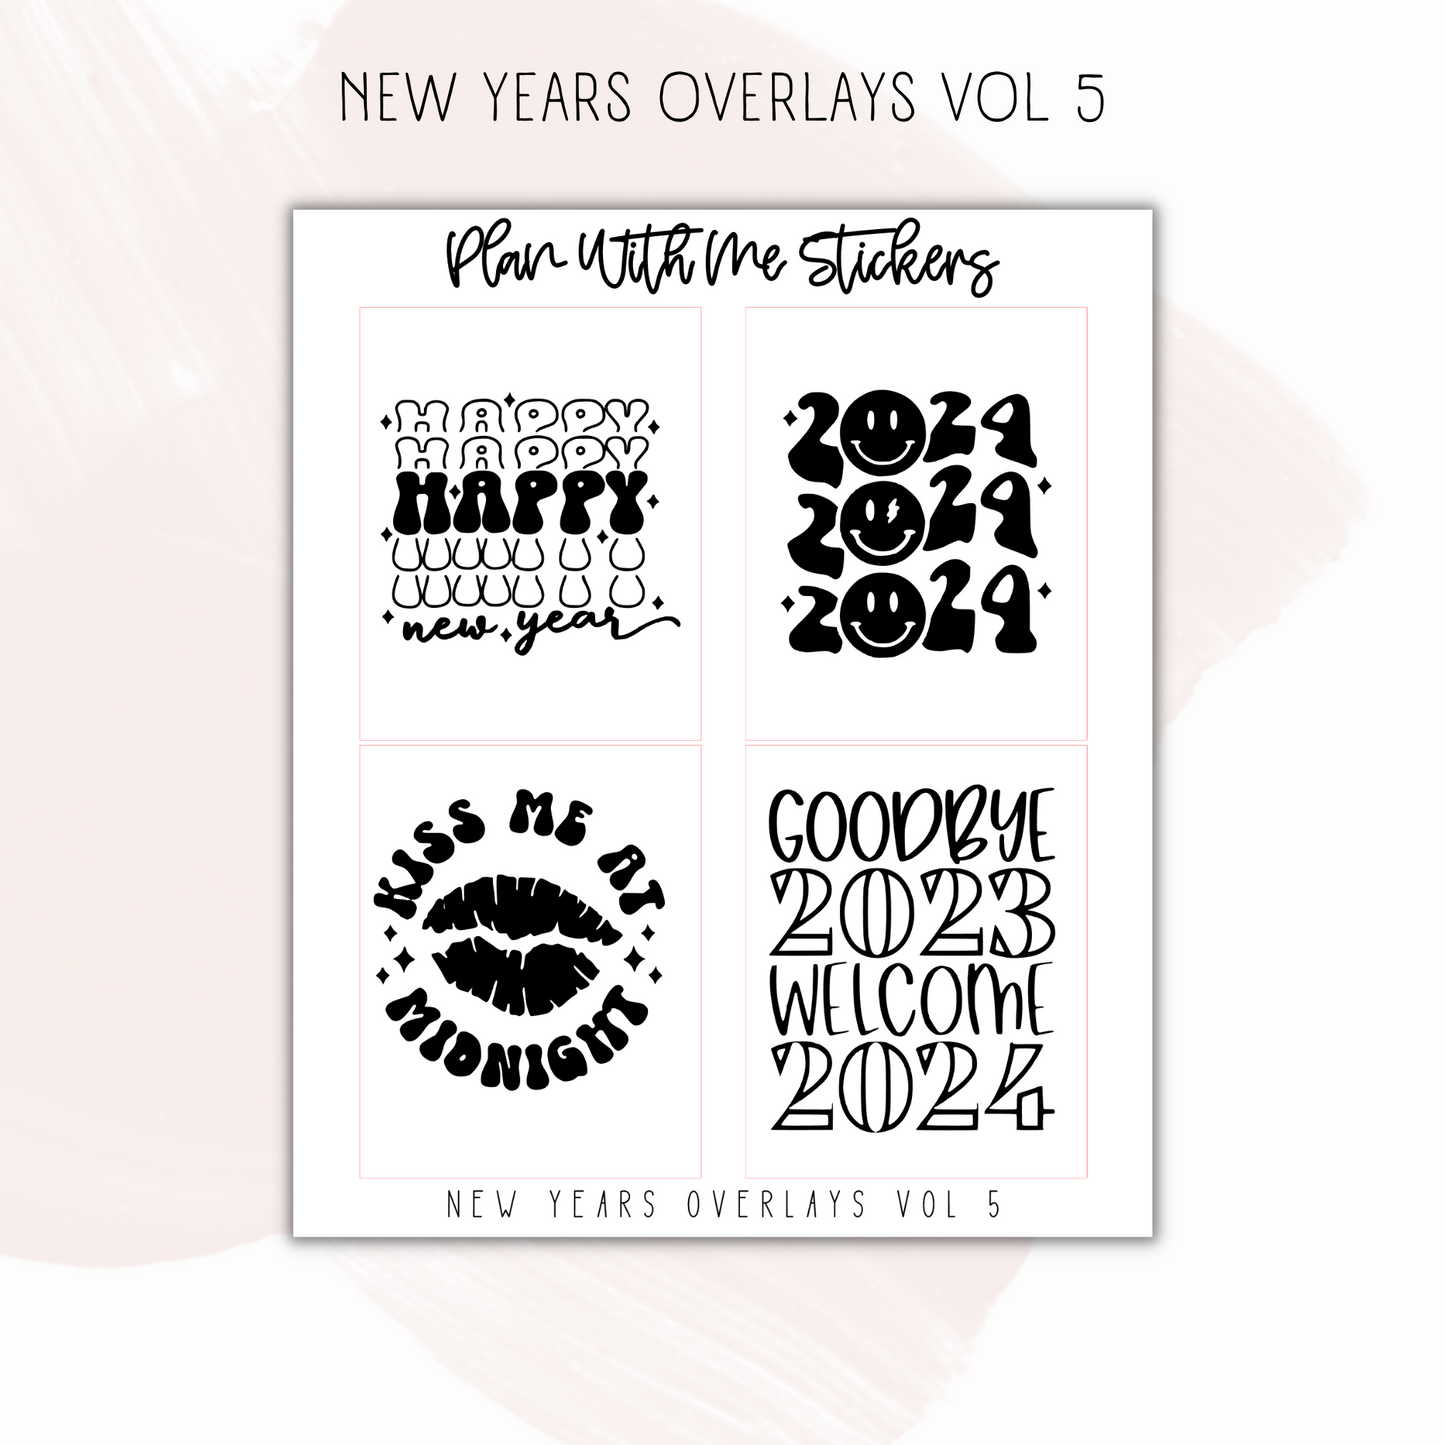 New Years Overlays Vol 5